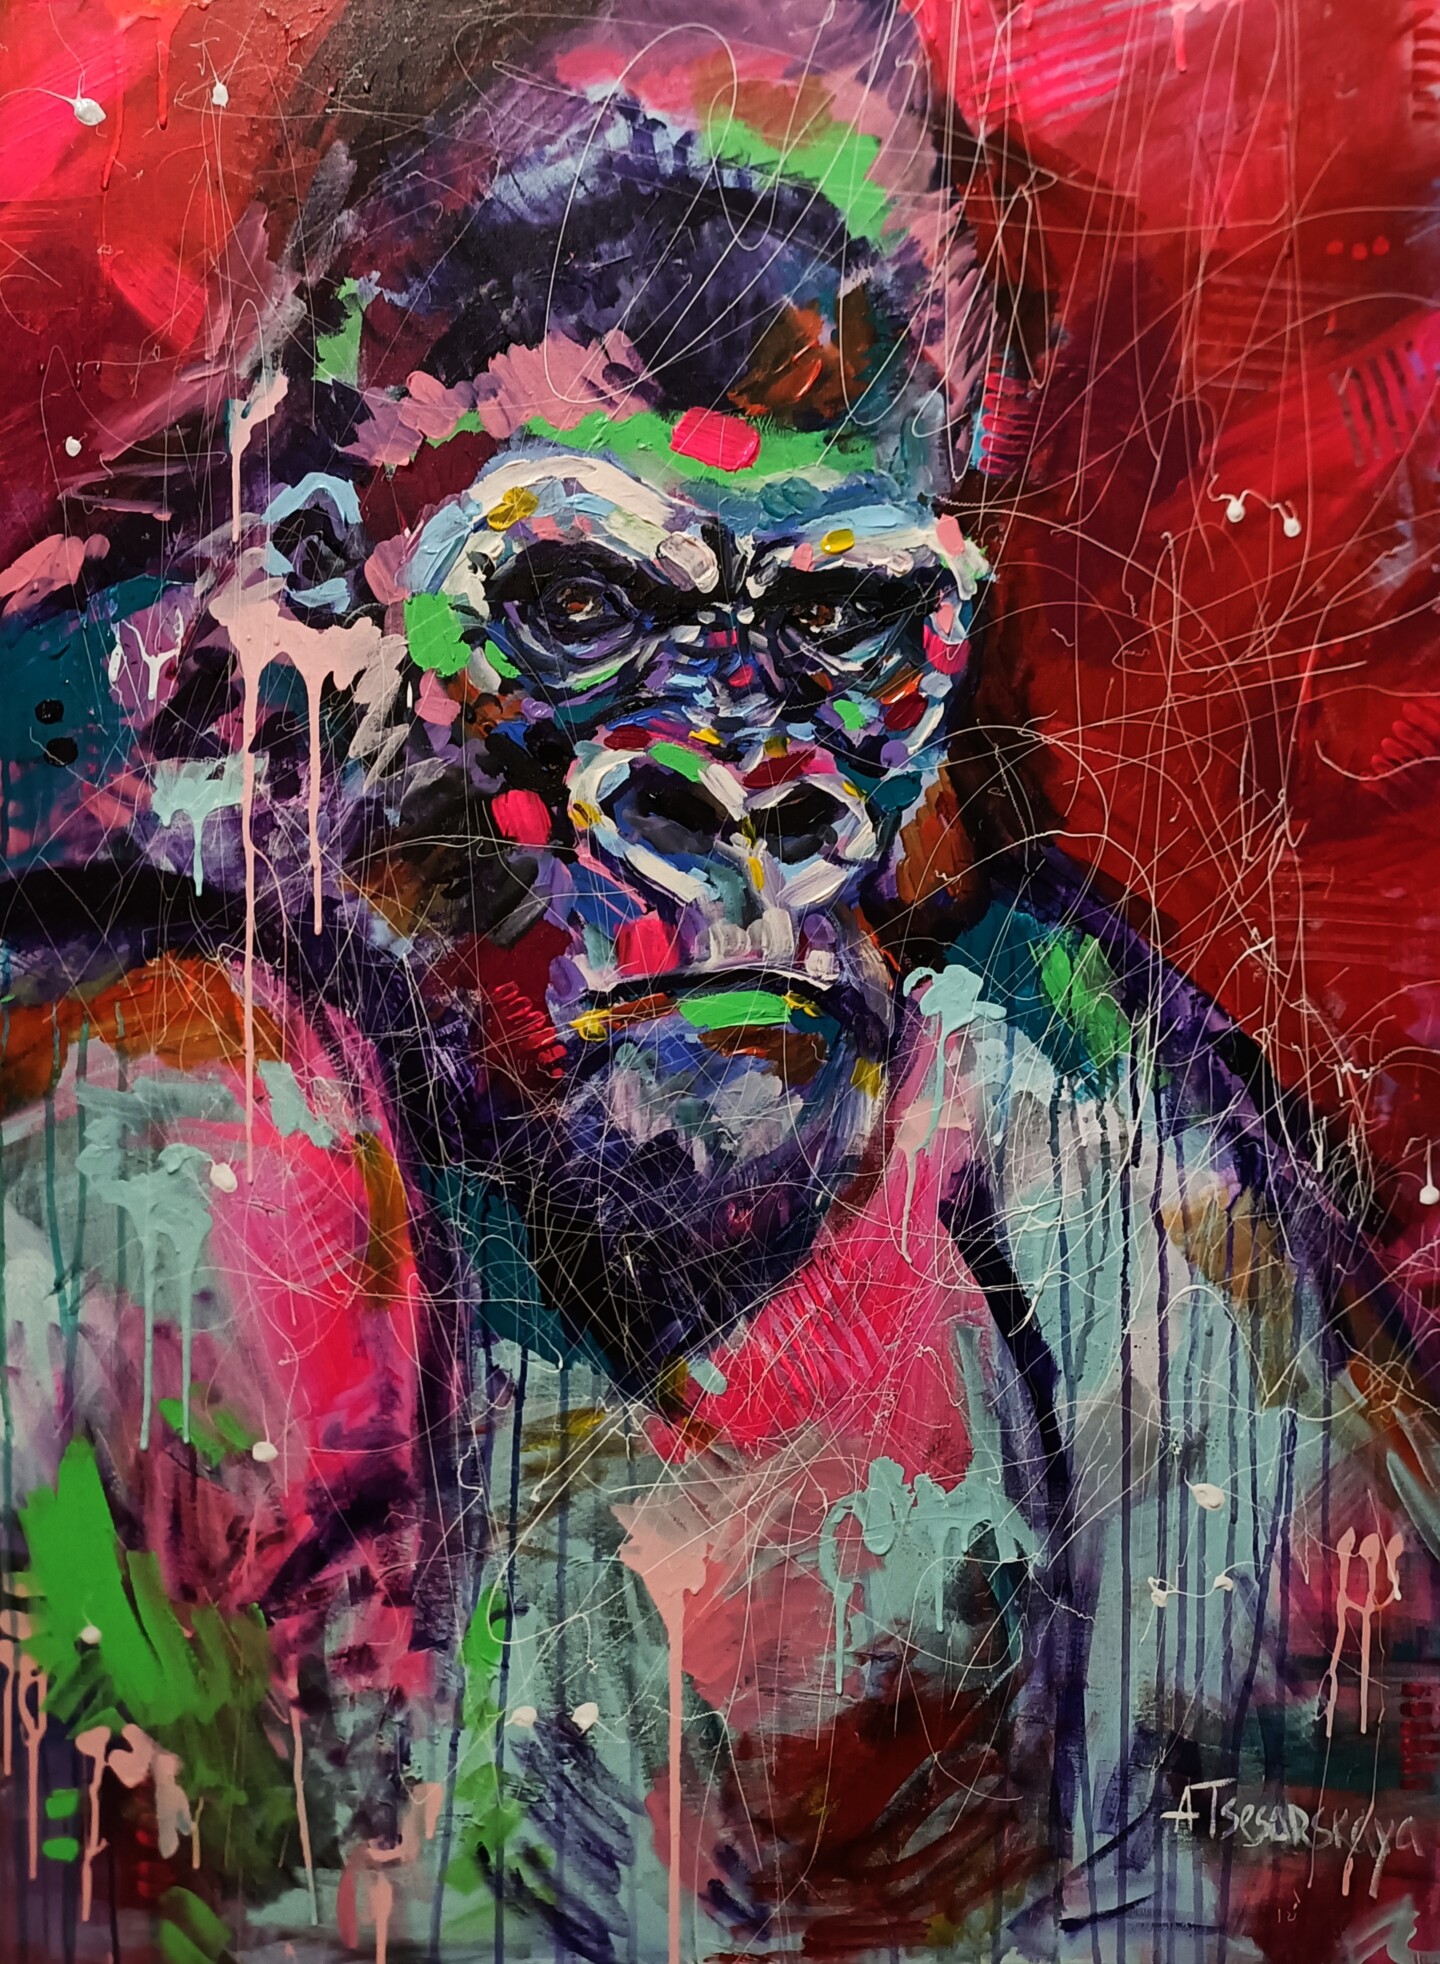 King Gorilla #009 - King Gorilla - Graffiti Minimalist Pop Art